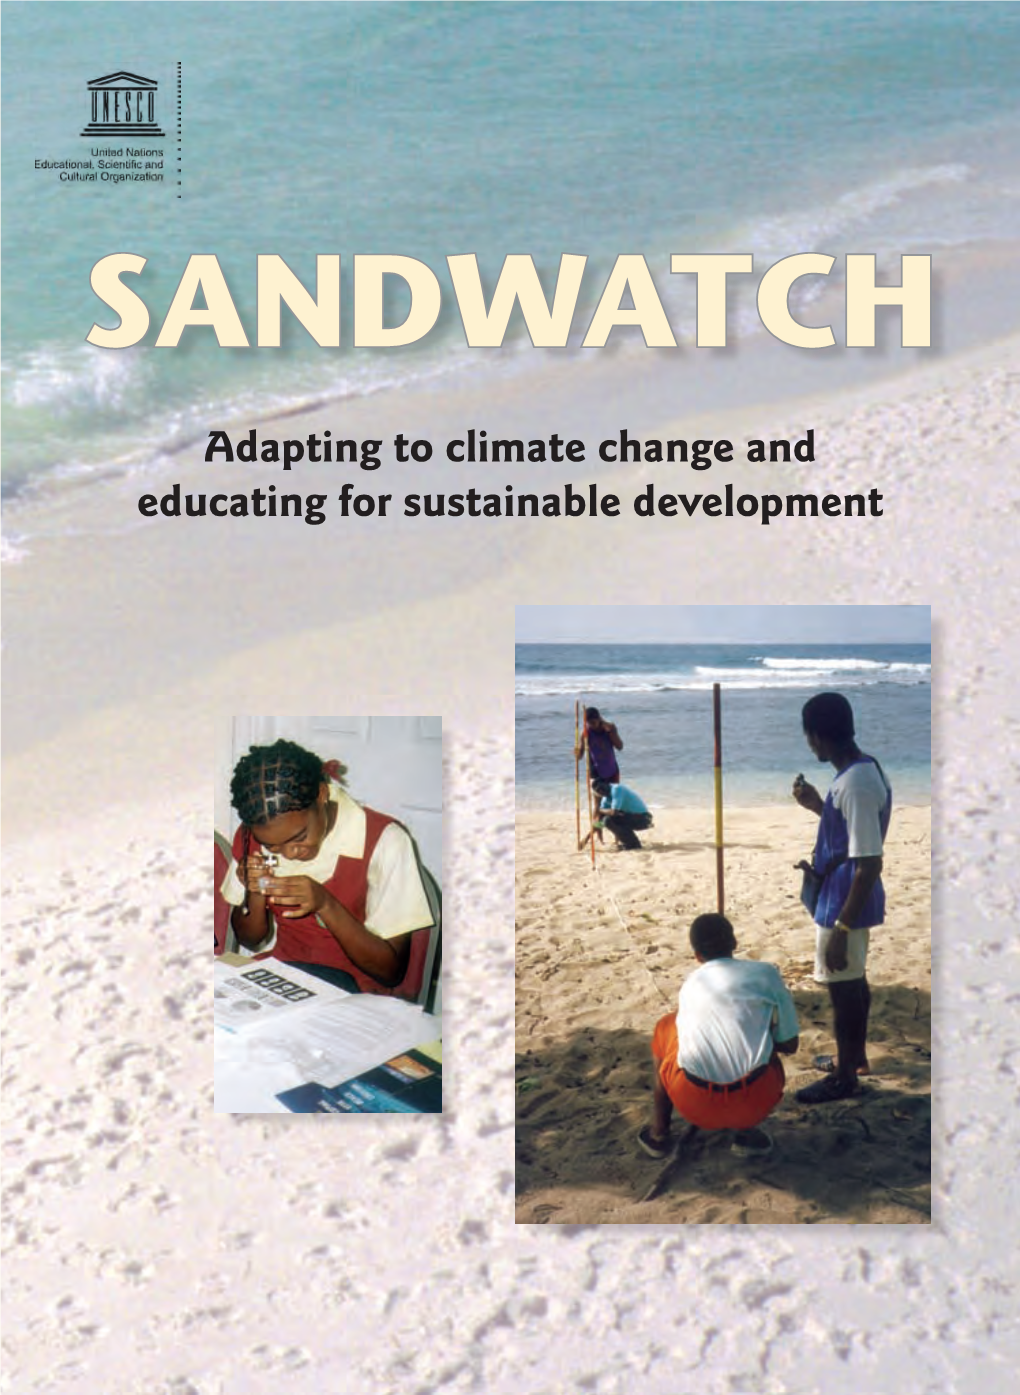 Sandwatch Manual